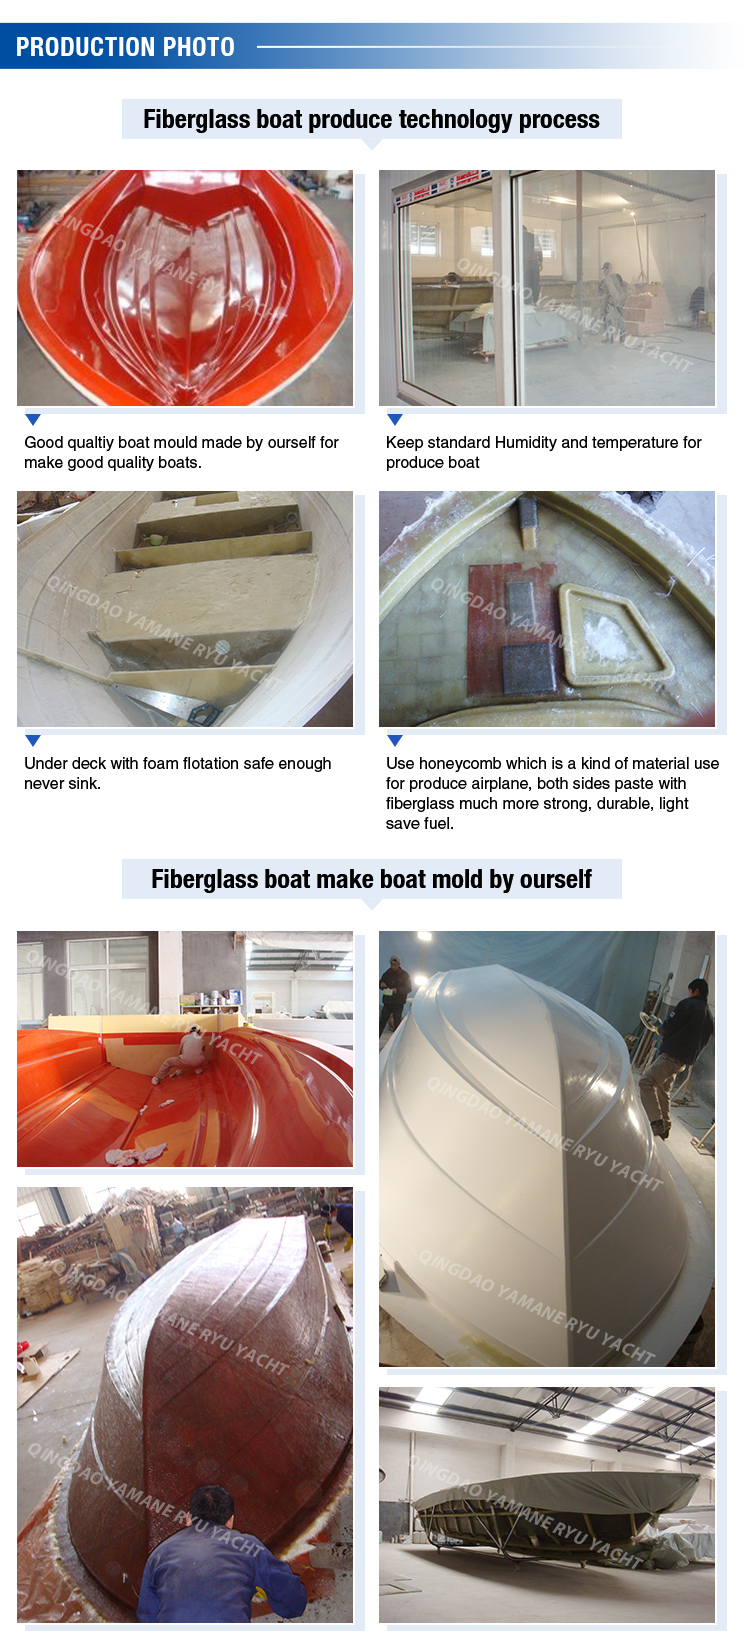 fiberglass boat produce technology